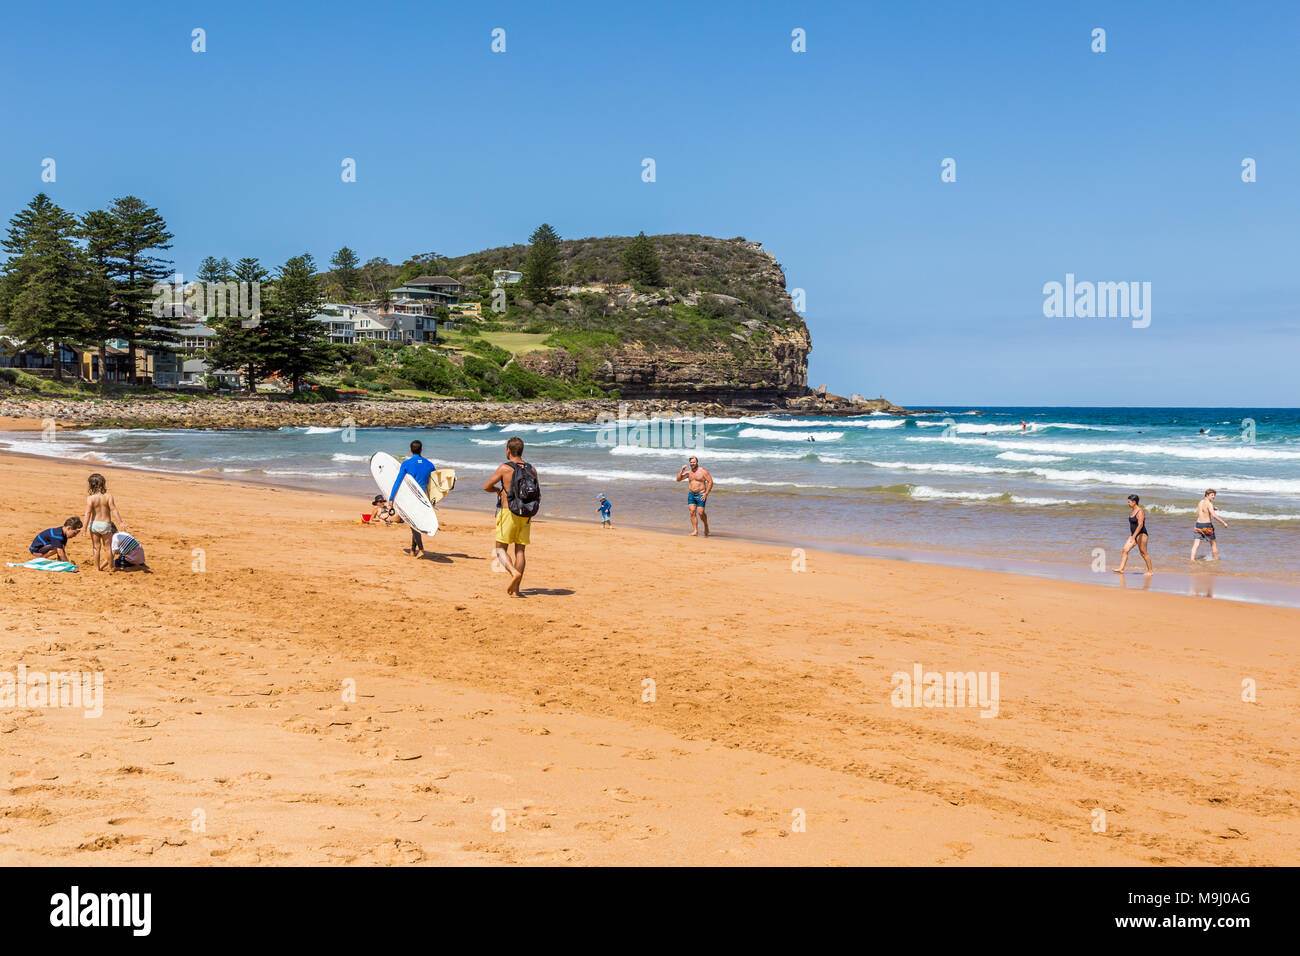 People enjoying Avalon Beach, NSW, Australia. January o4, 2018. Stock Photo